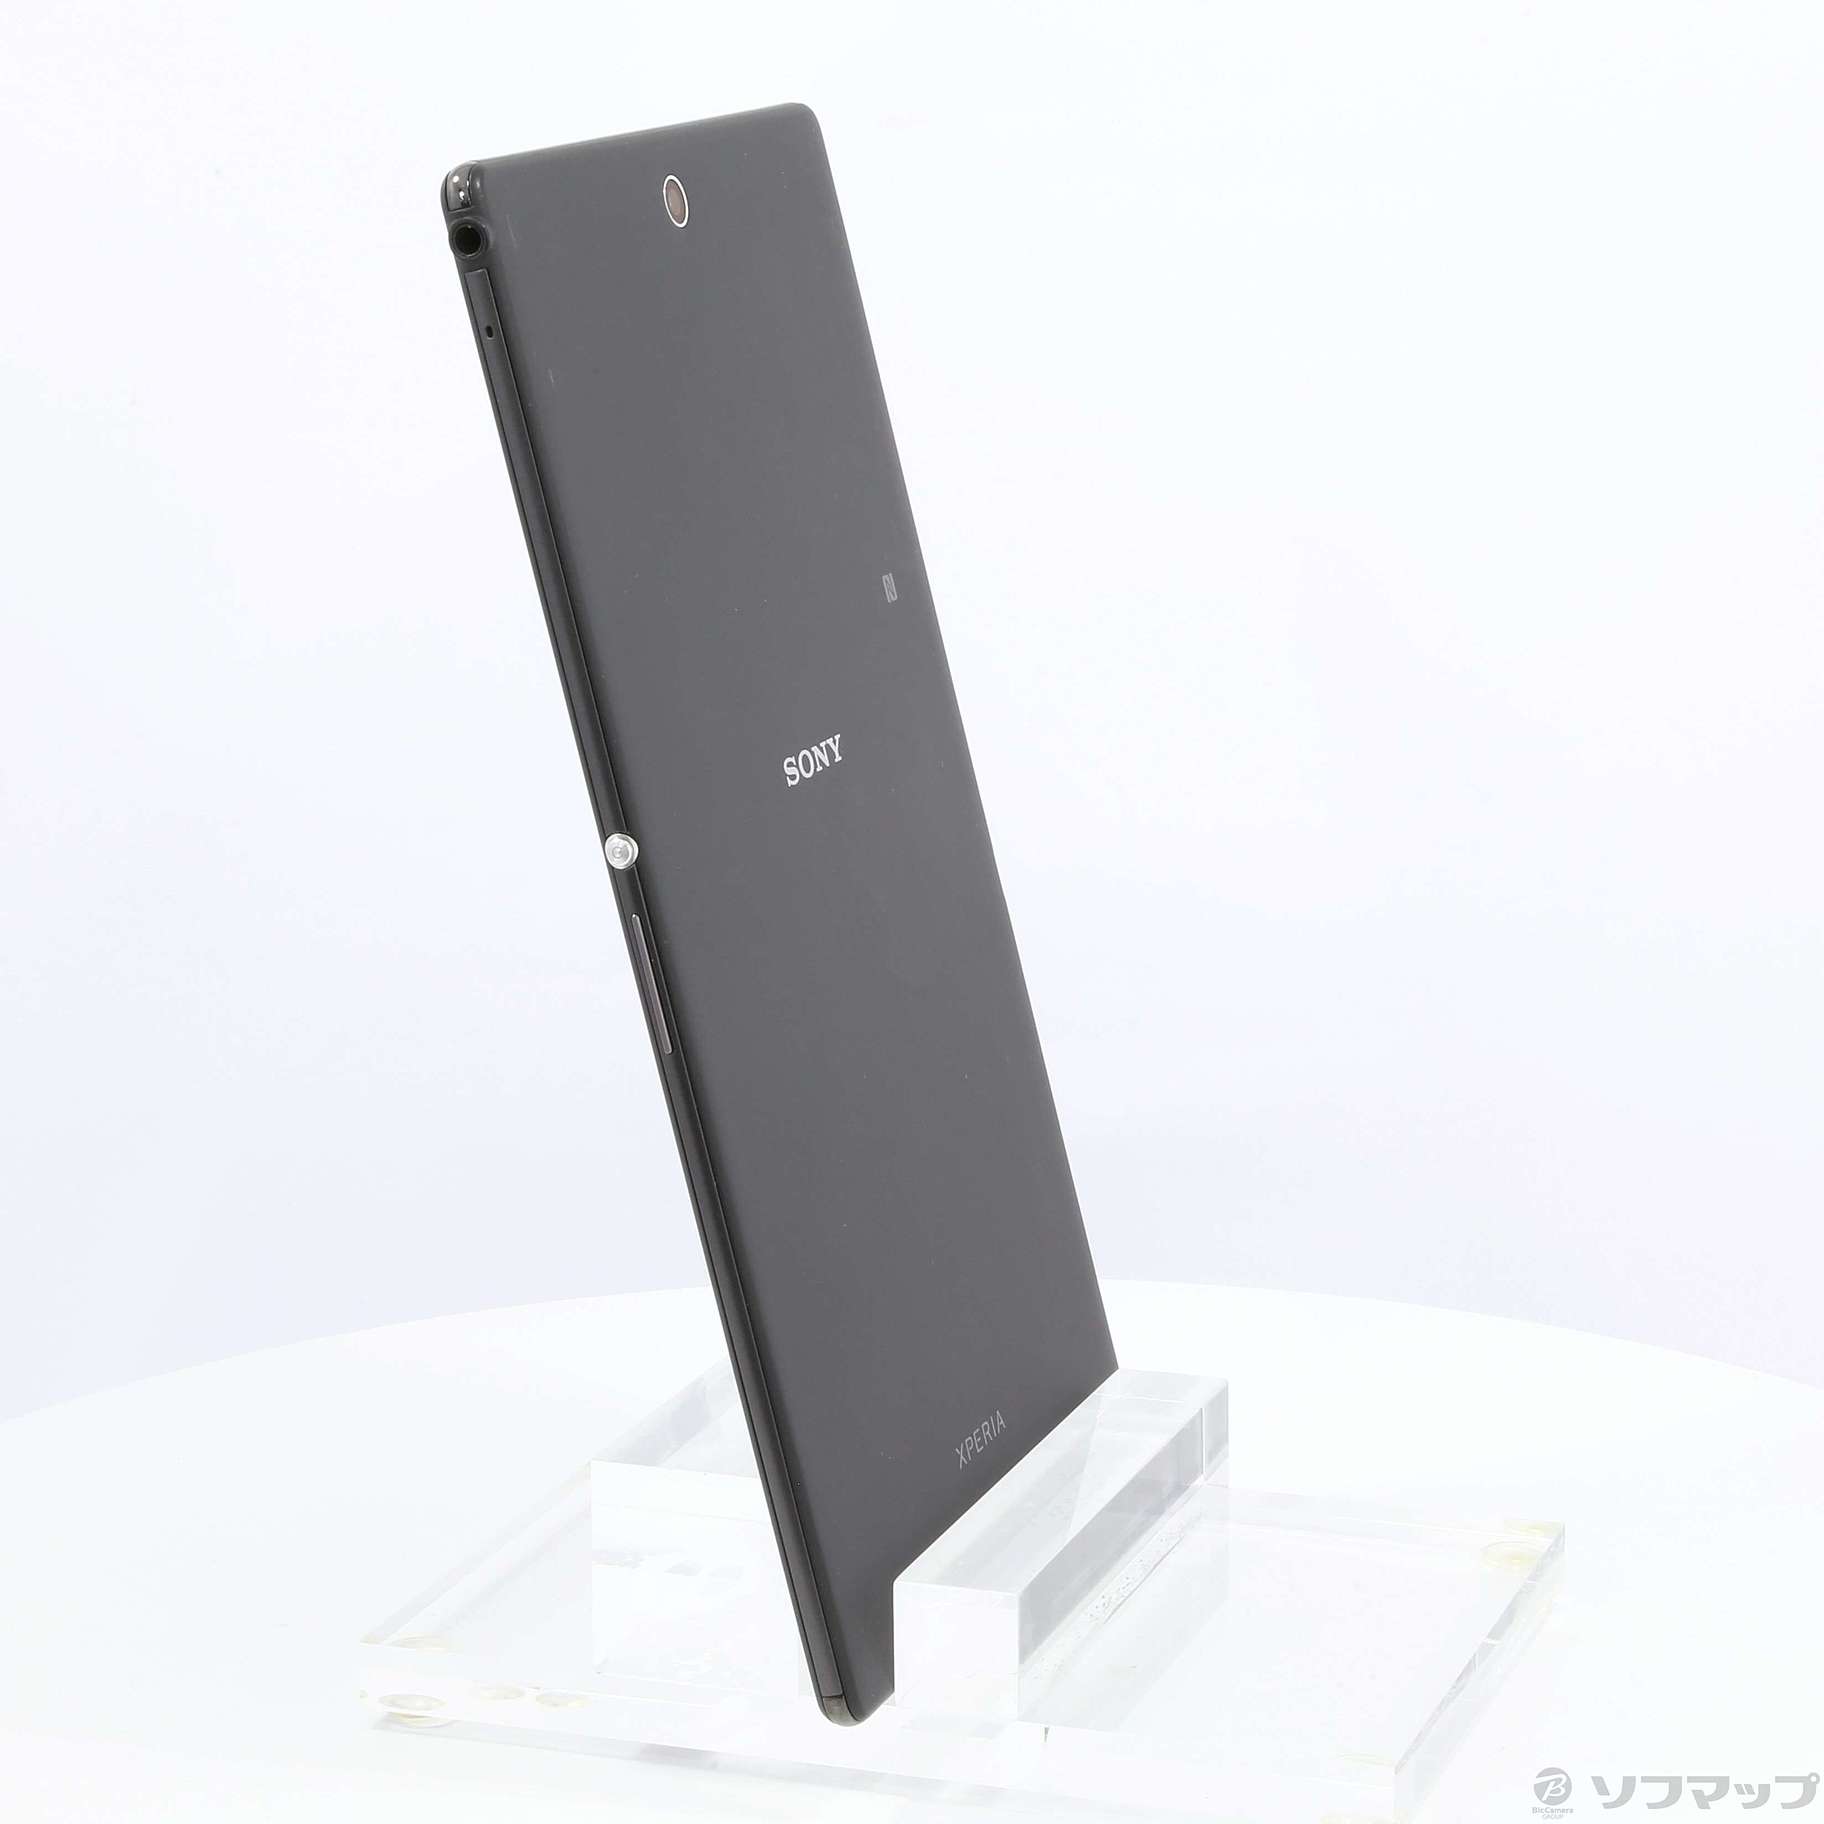 Xperia Z3 Tablet Compact 16GB ブラック SGP611JPB Wi-Fi